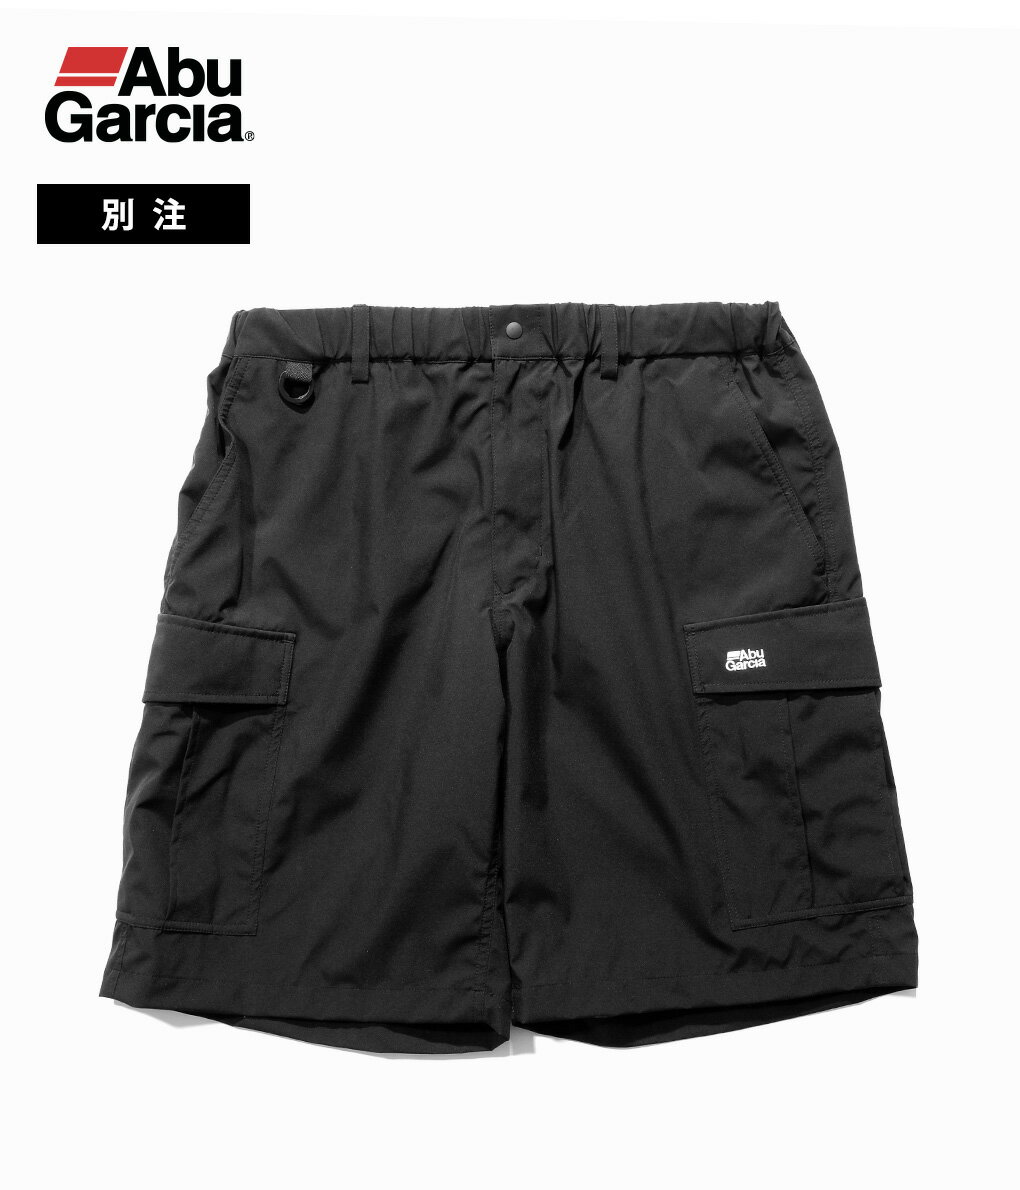 Abu Garcia / アブガルシア : 別注 Cargo shorts : カーゴショーツ ハーフパンツ ショートパンツ ボトムス 防水 通気性 フィッシング 釣り アウトドア キャンプ ミリタリー ウエスト調整可 セットアップ: ONLYARK-0-3004